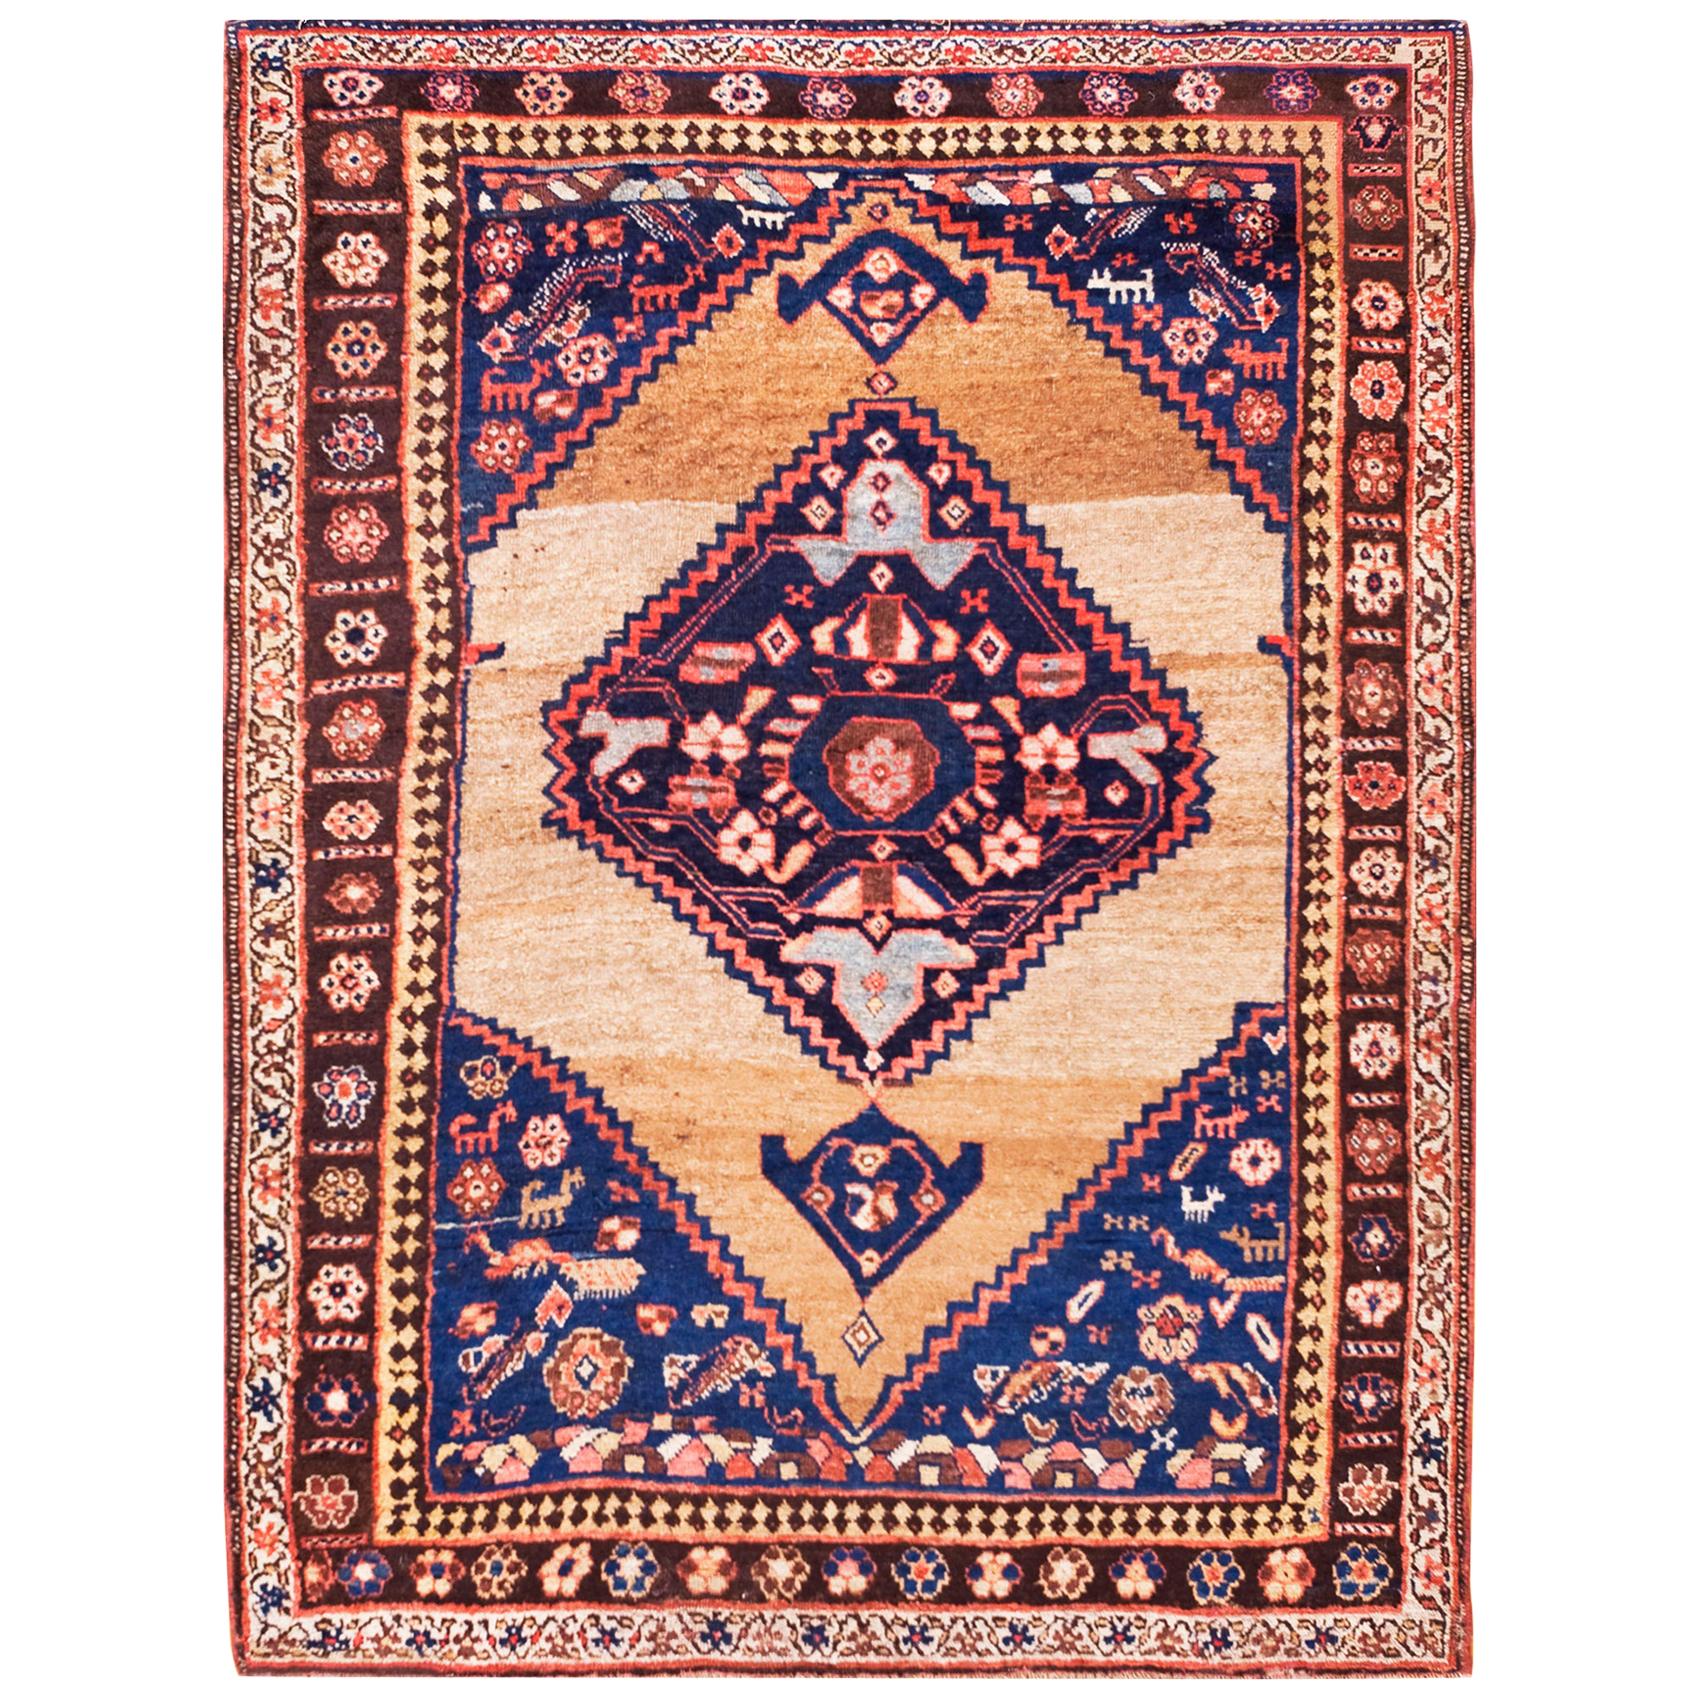 Late 19th Century W. Persian Bijar Rug ( 4'5" x 5'9" - 135 x 175 ) For Sale